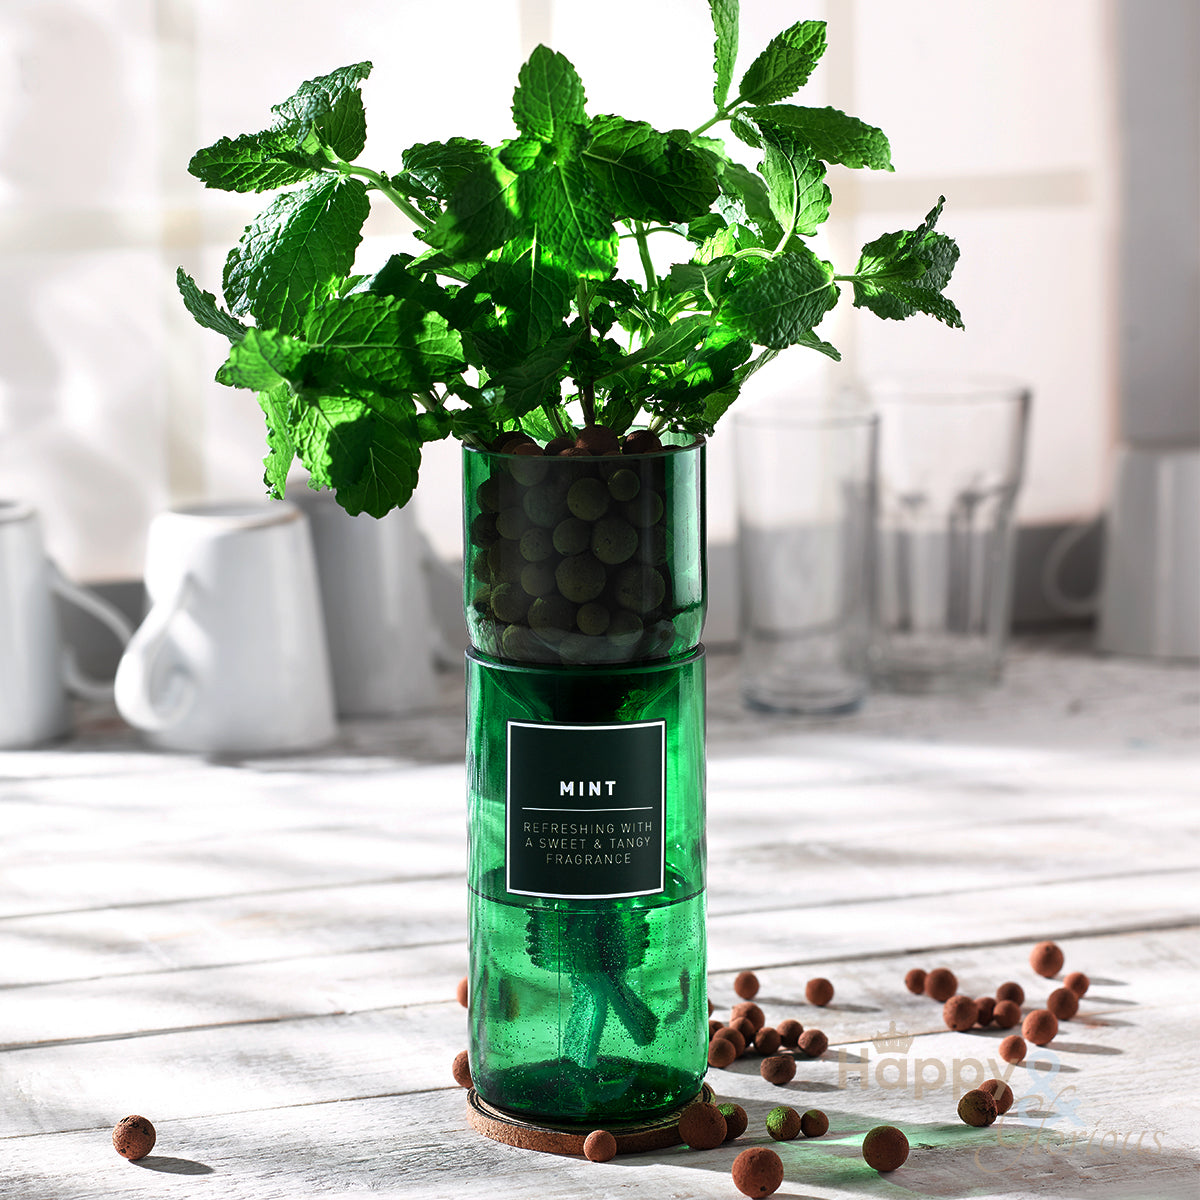 Mint hydroponic organic herb growing kit